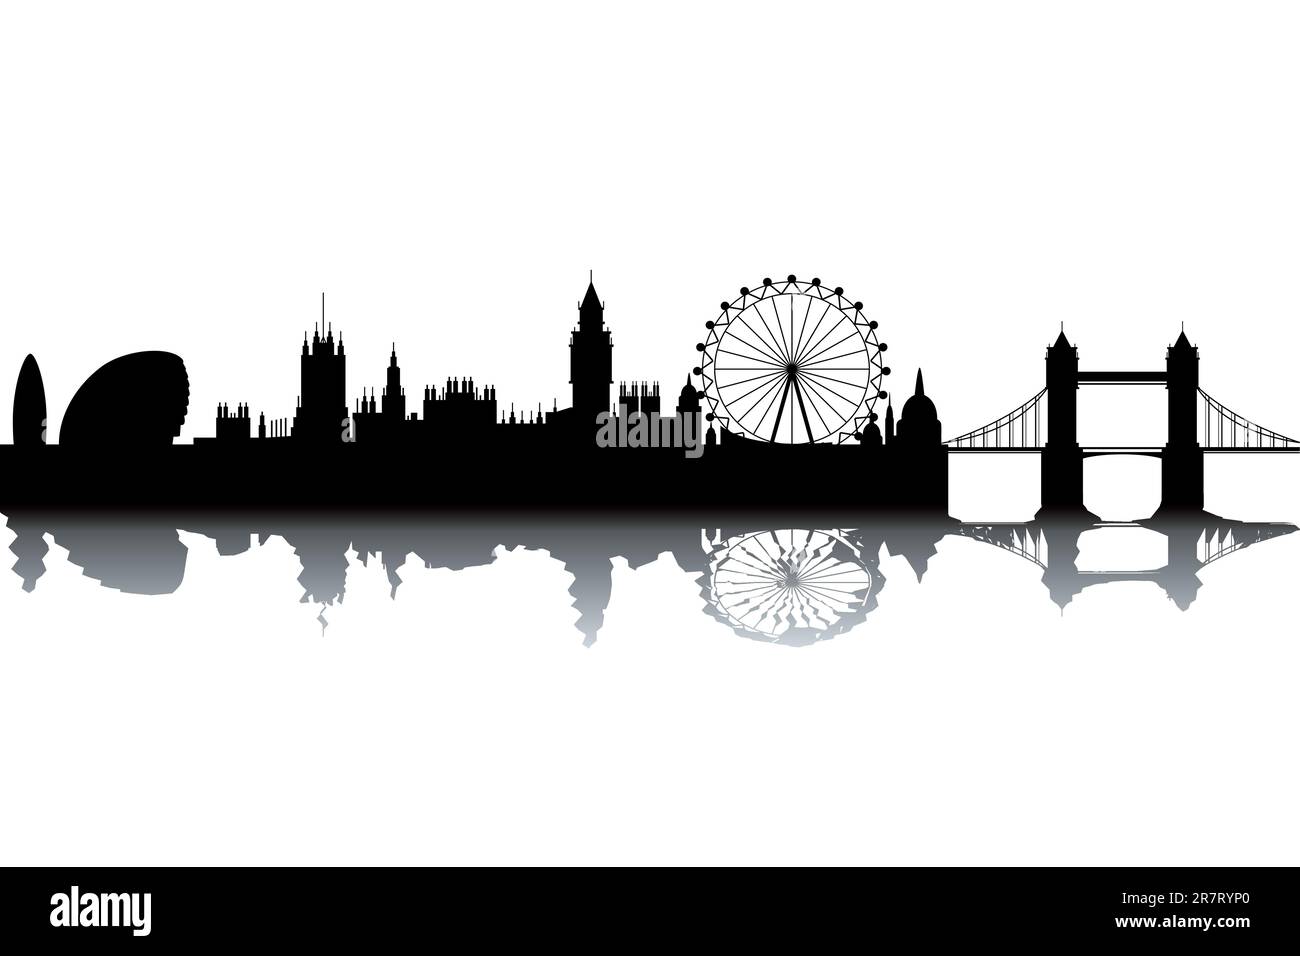 London skyline - black and white vector illustration Stock Vector